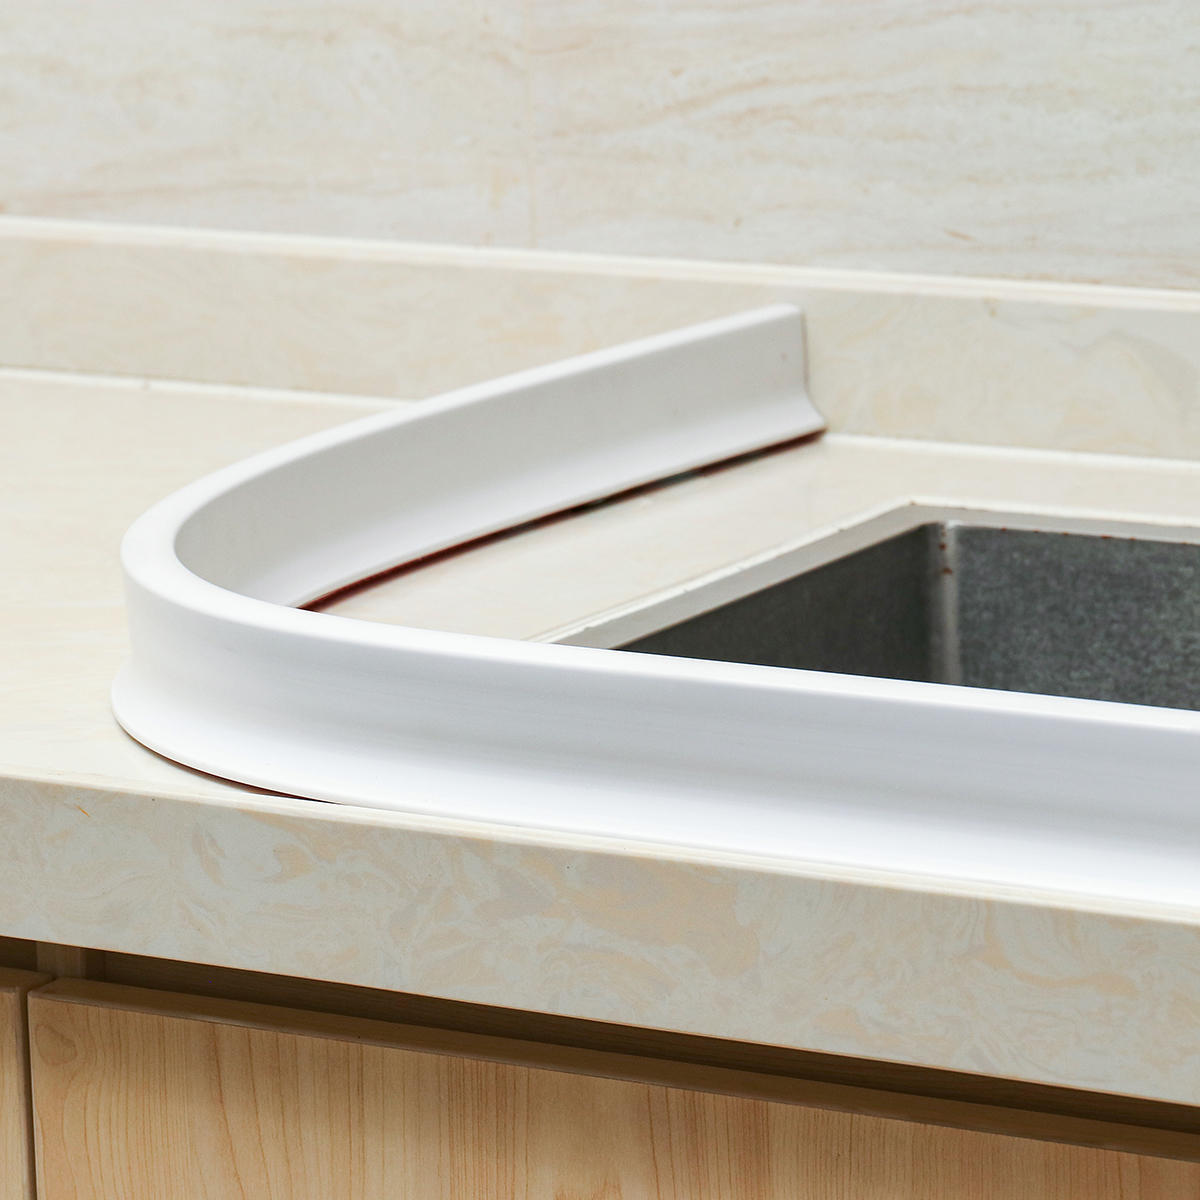 0.5m-1.5m Flexible Bathroom Kitchen Water Stopper Retaining Strip Shower Barrier Sealing